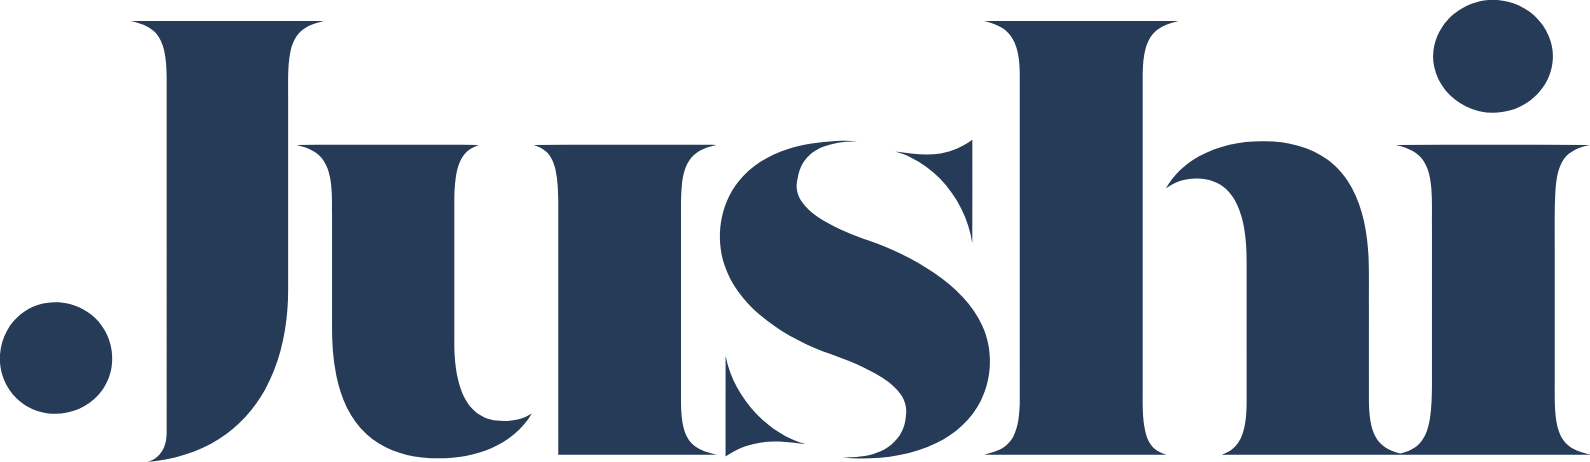 Jushi Holdings logo large (transparent PNG)